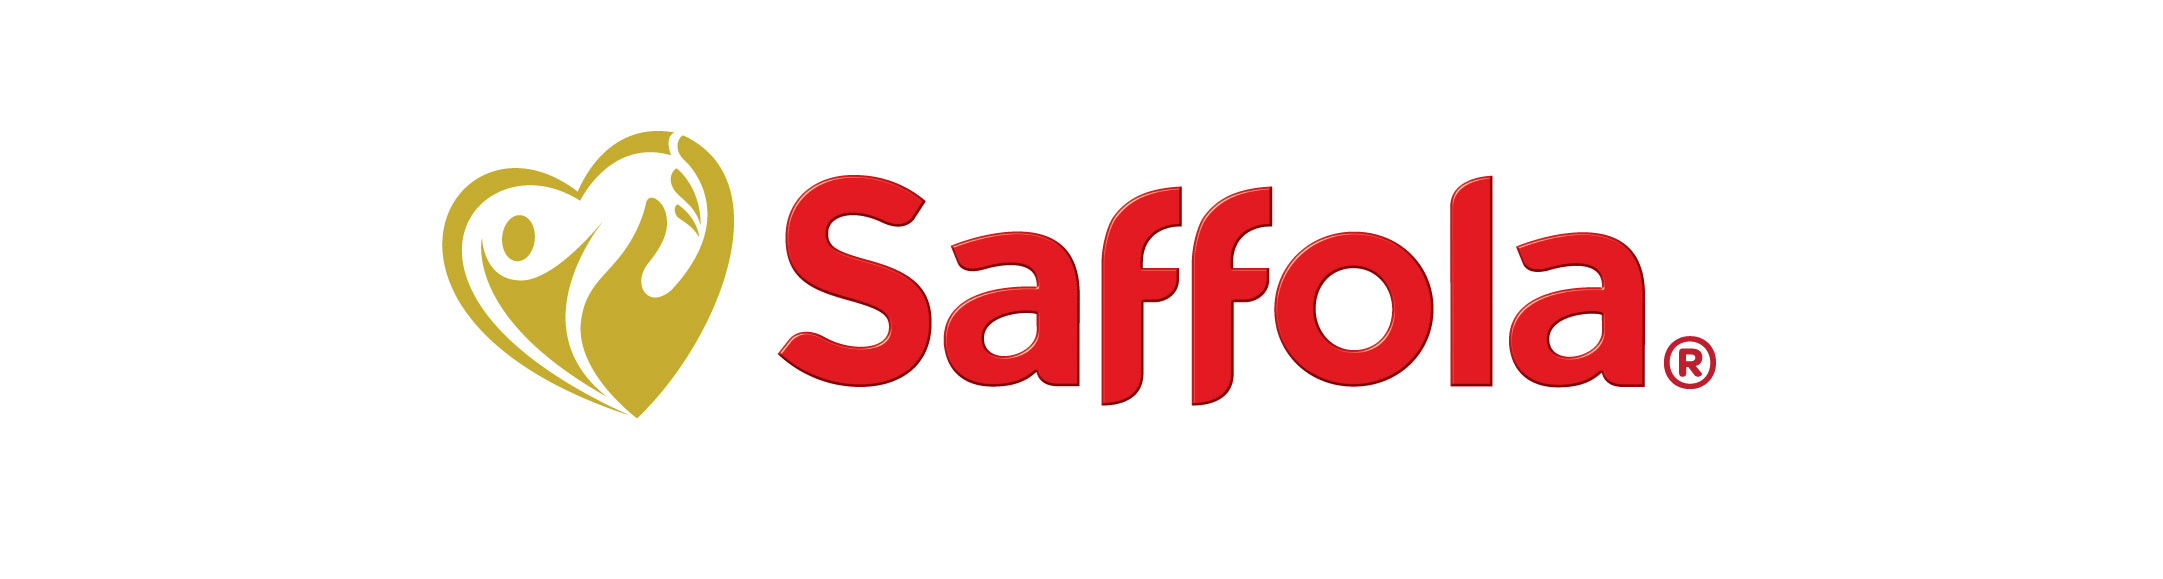 Saffola Brand Logo